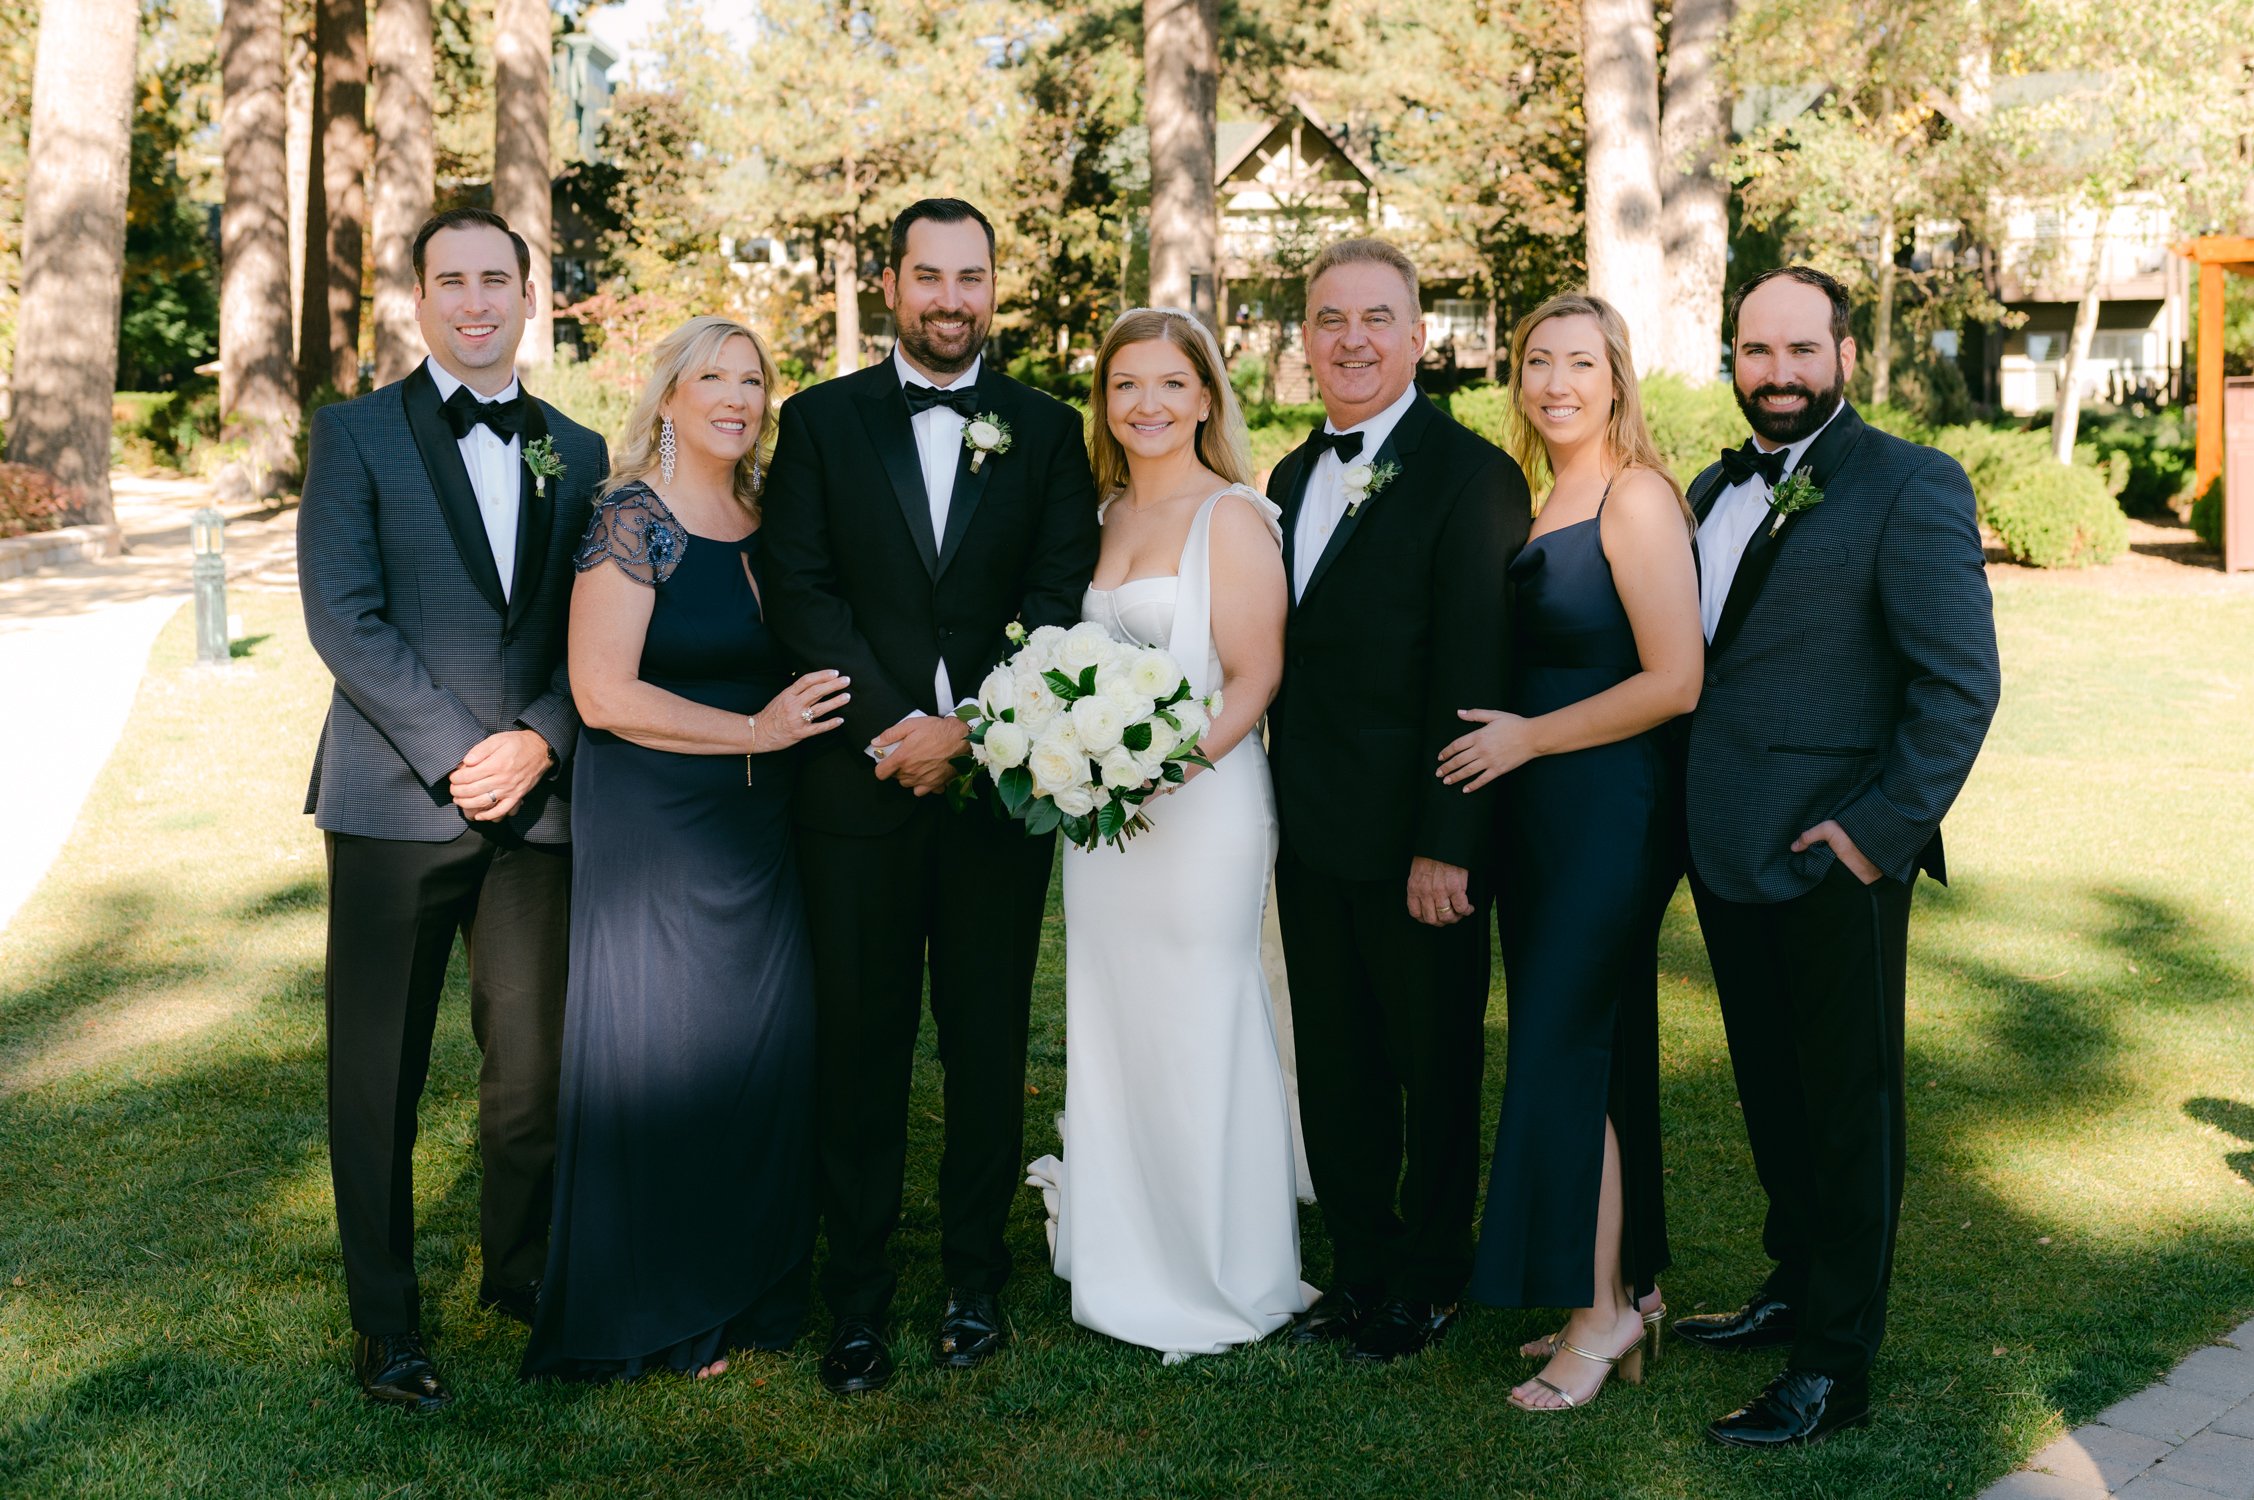 Hyatt Lake Tahoe wedding, photo of family